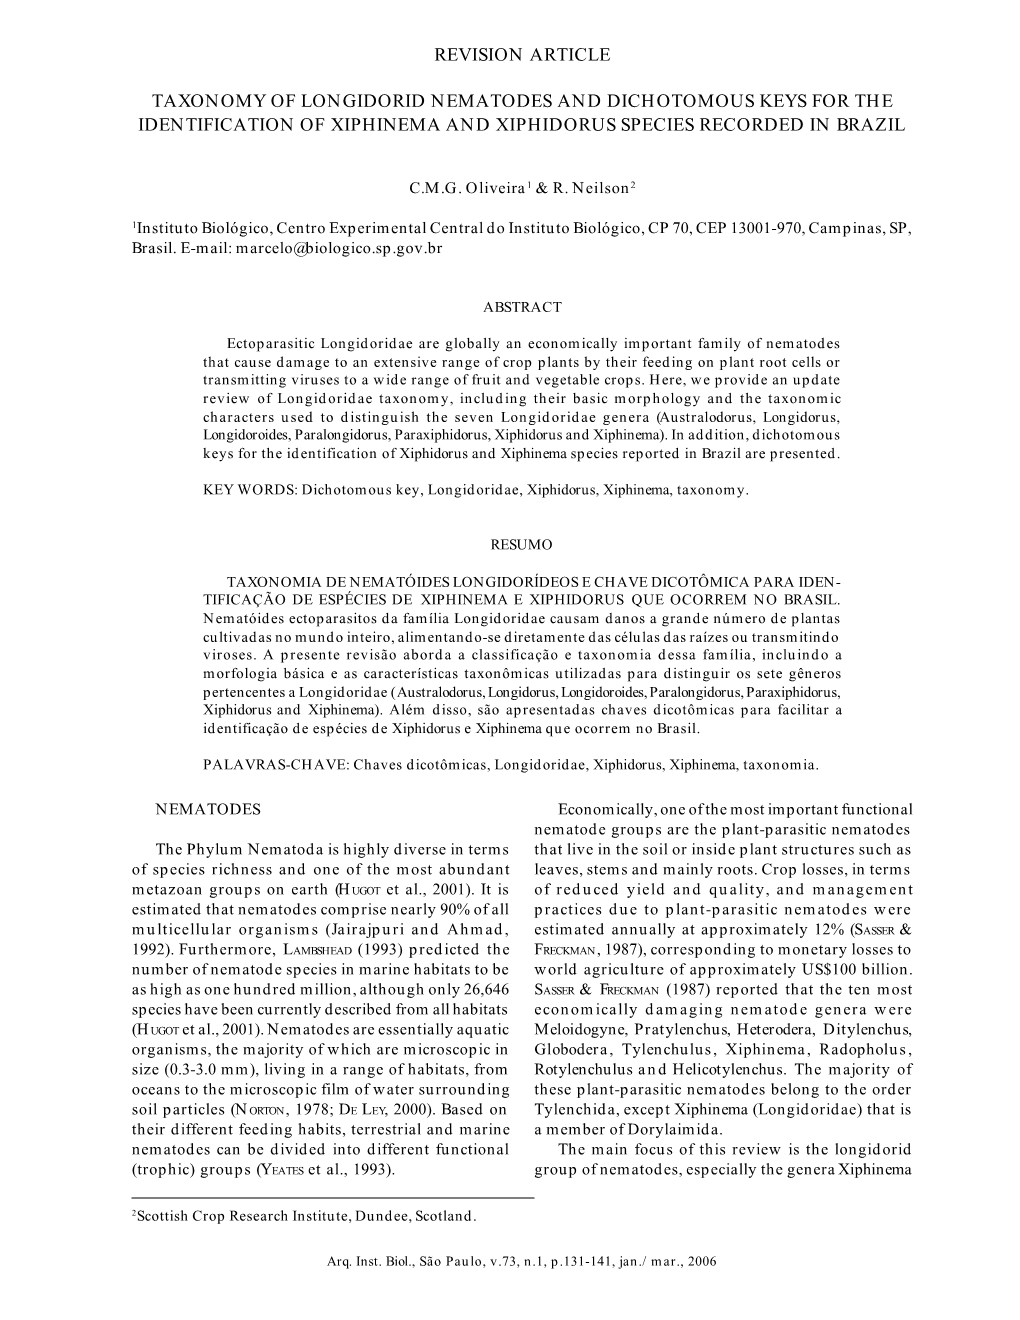 Revision Article Taxonomy of Longidorid Nematodes And